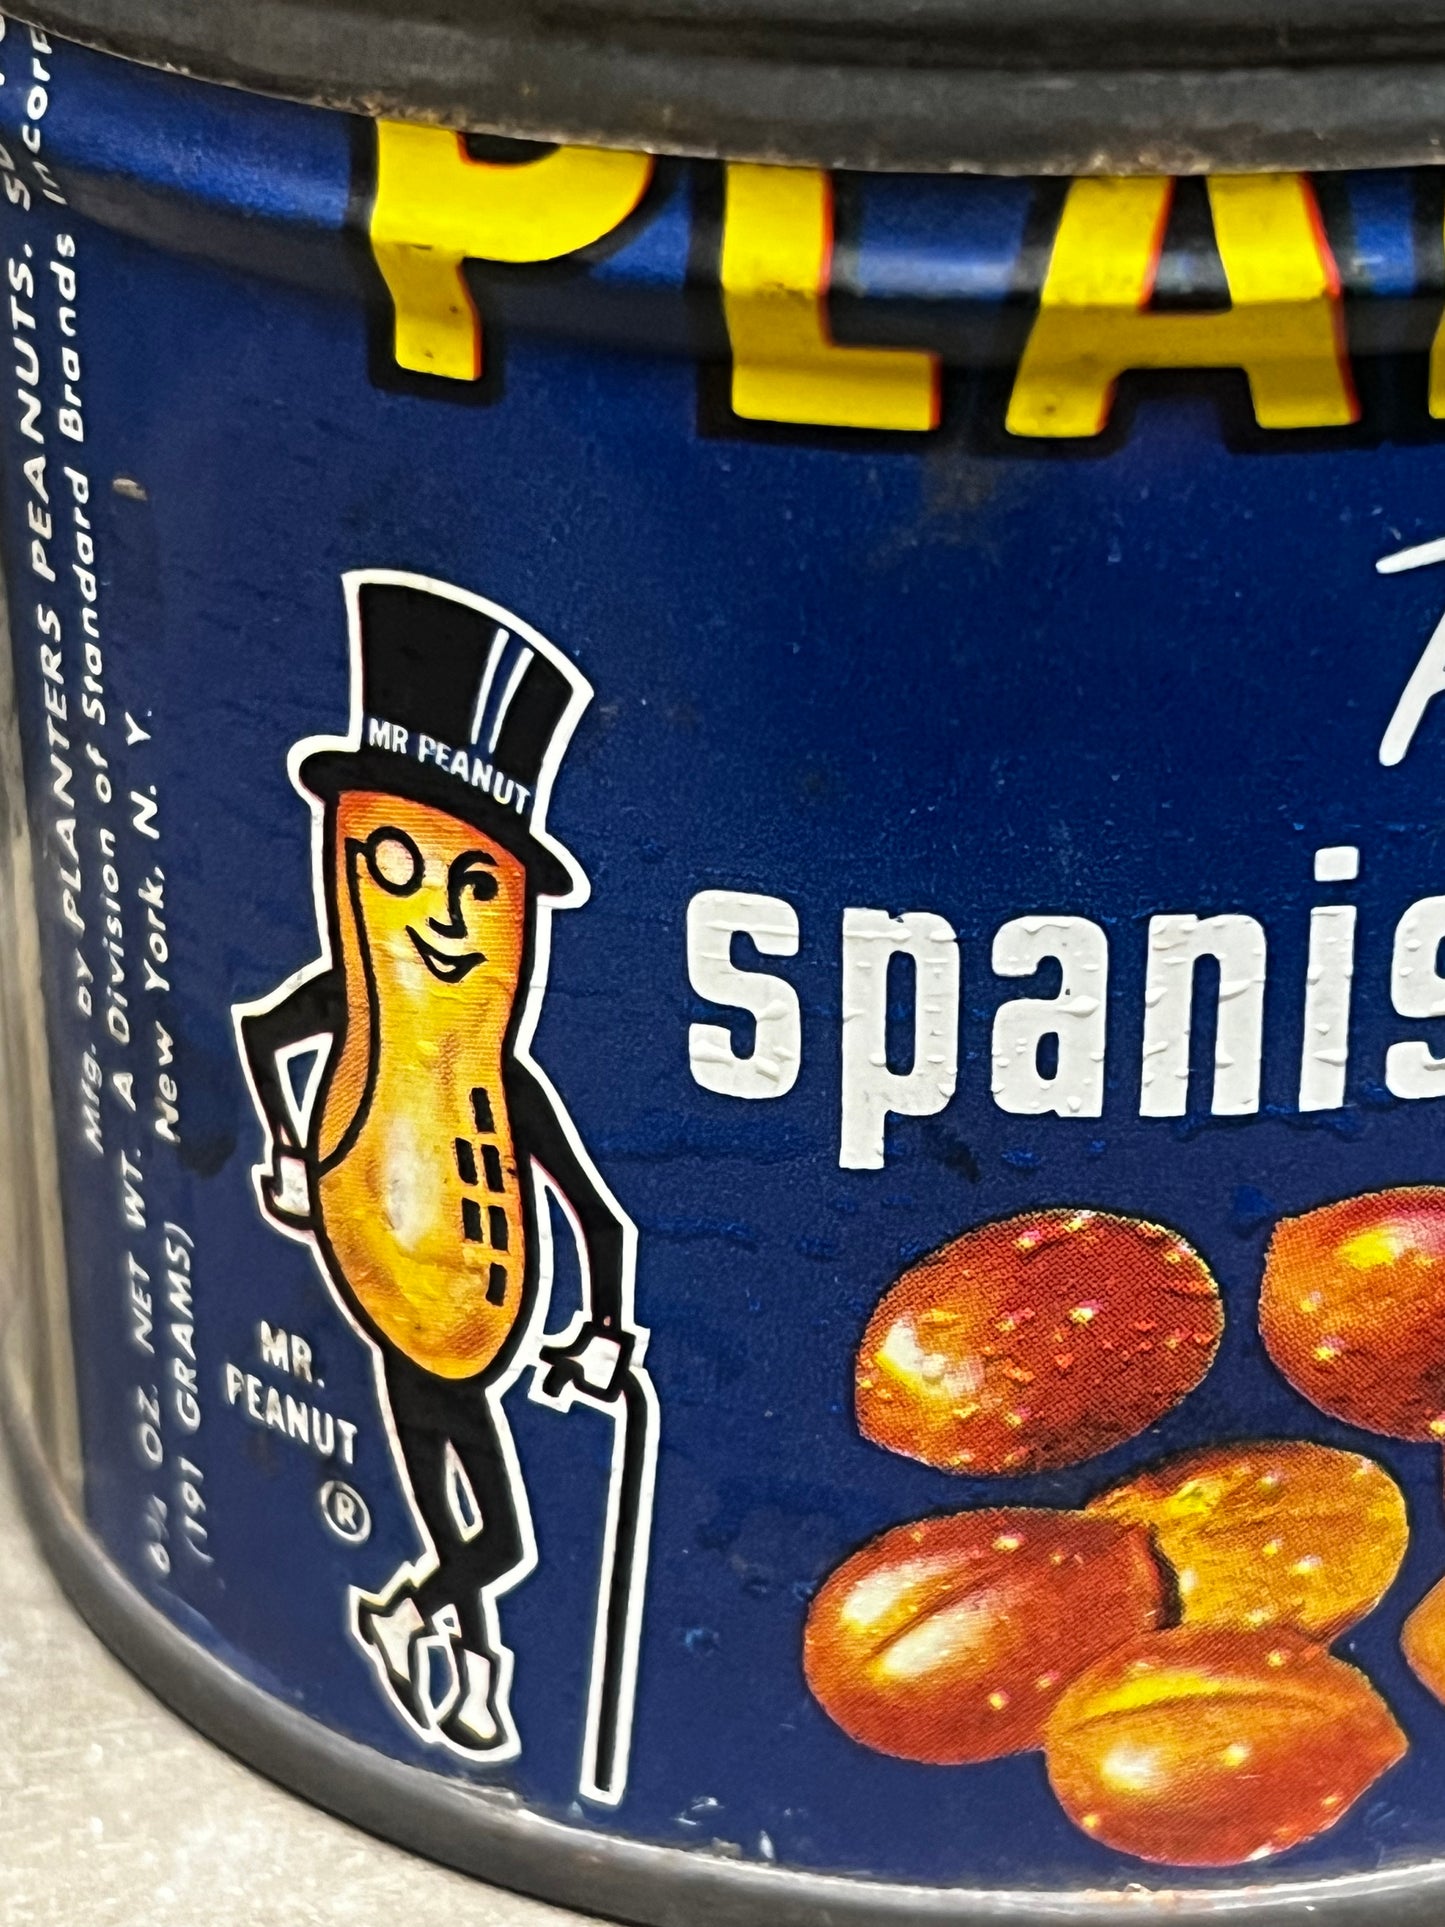 Advertising, PLANTERS SPANISH PEANUTS